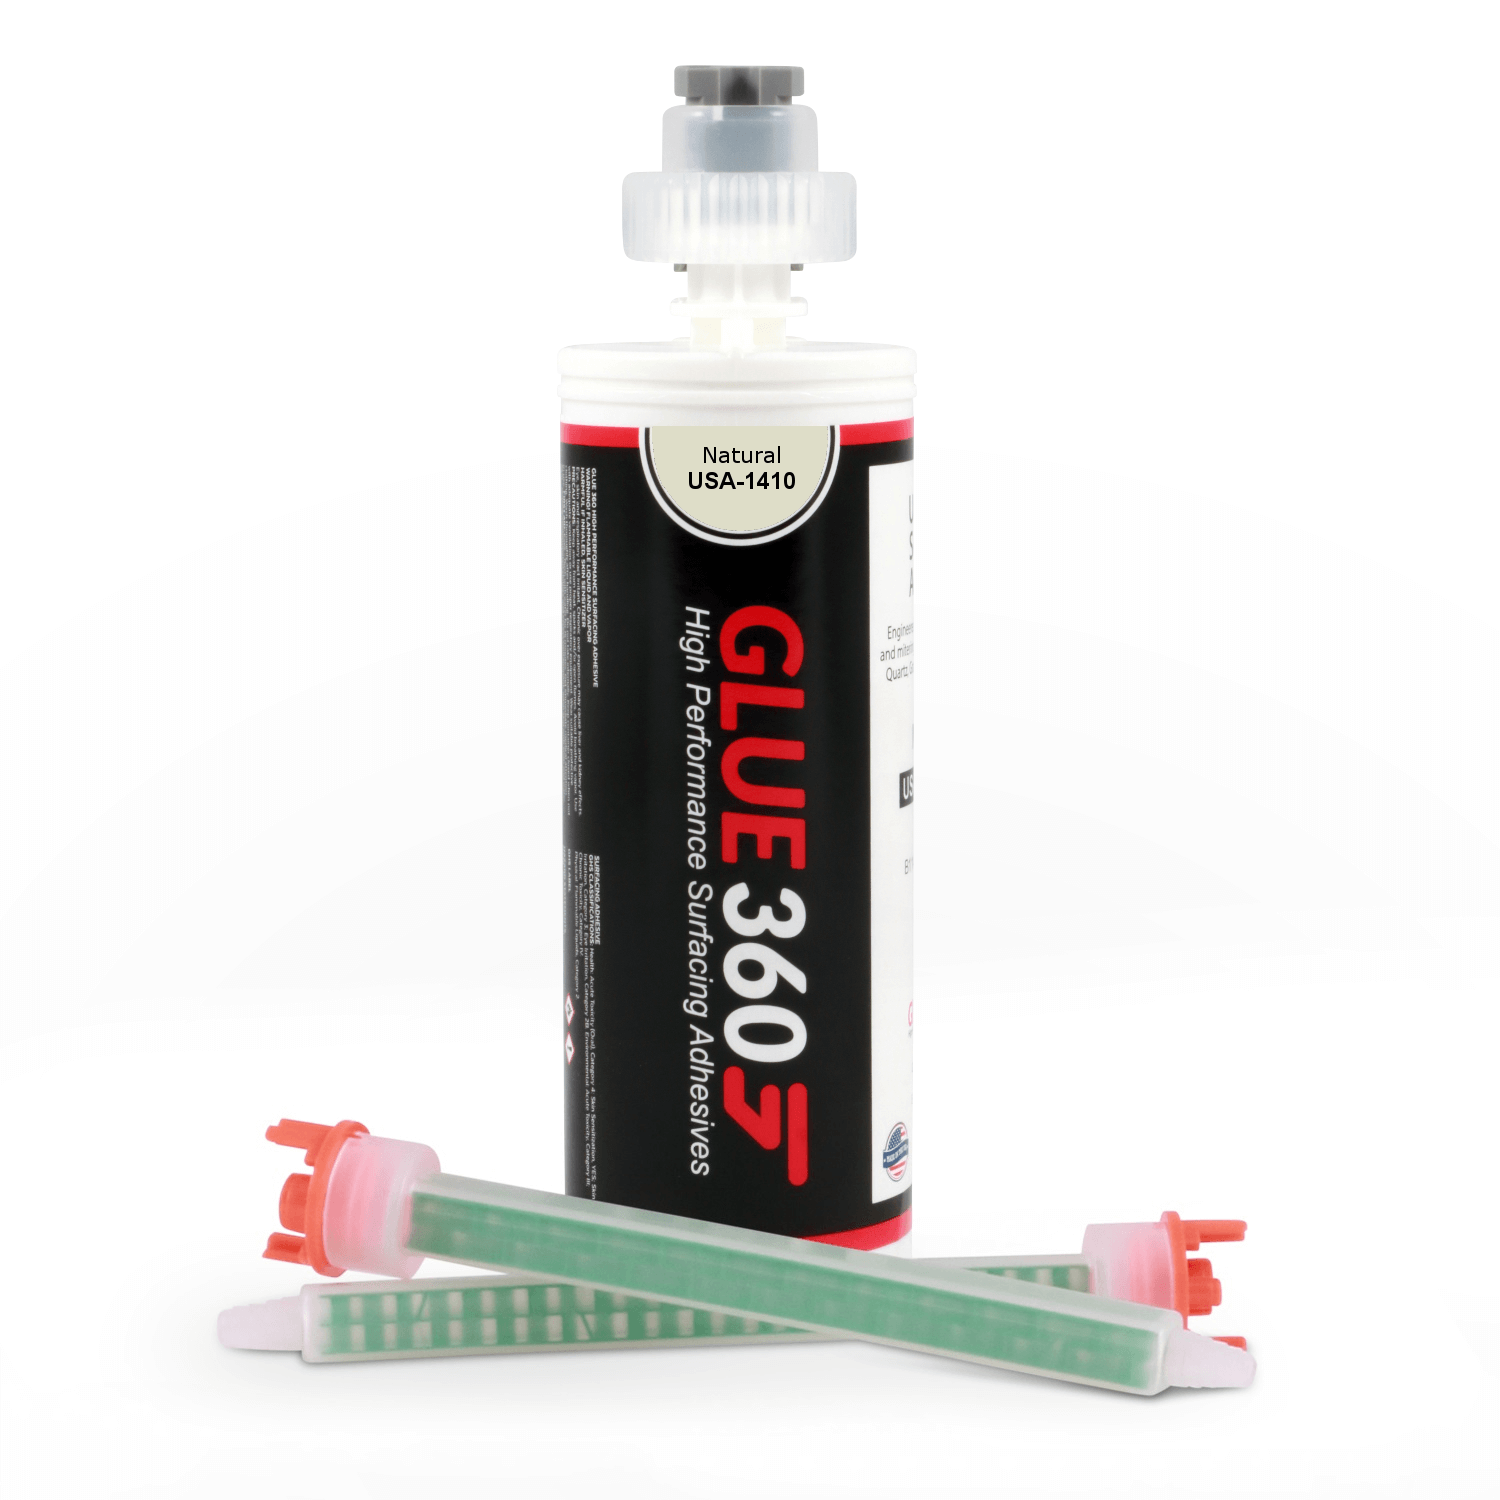 GLUE 360- Universal Seaming Adhesive - 250 ml Cartridges GLUE 360 INC